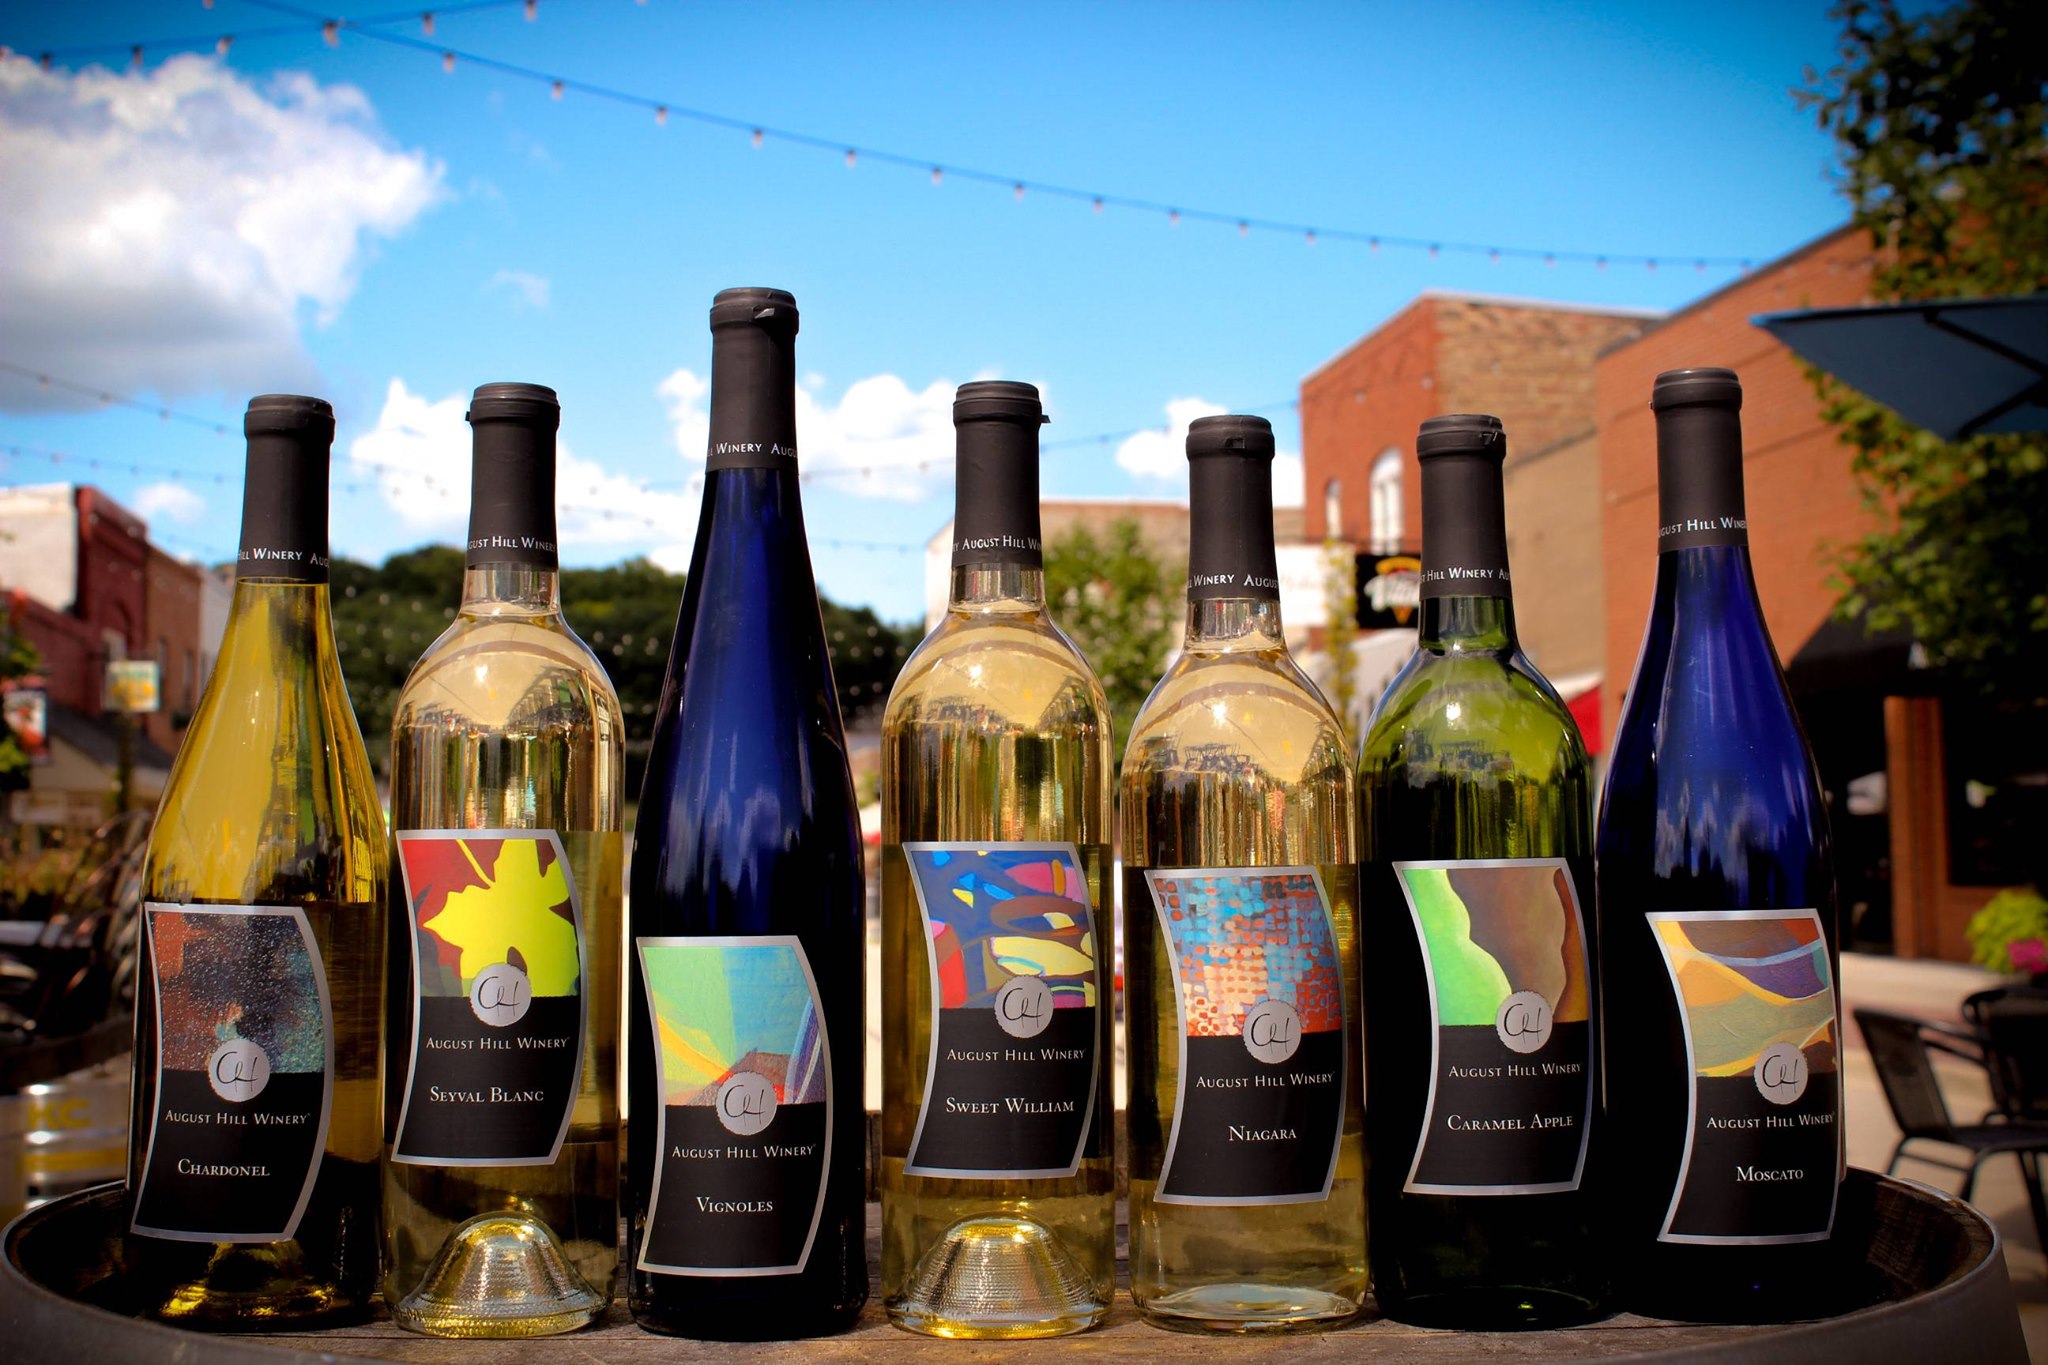 Bottles of August Hill Wine